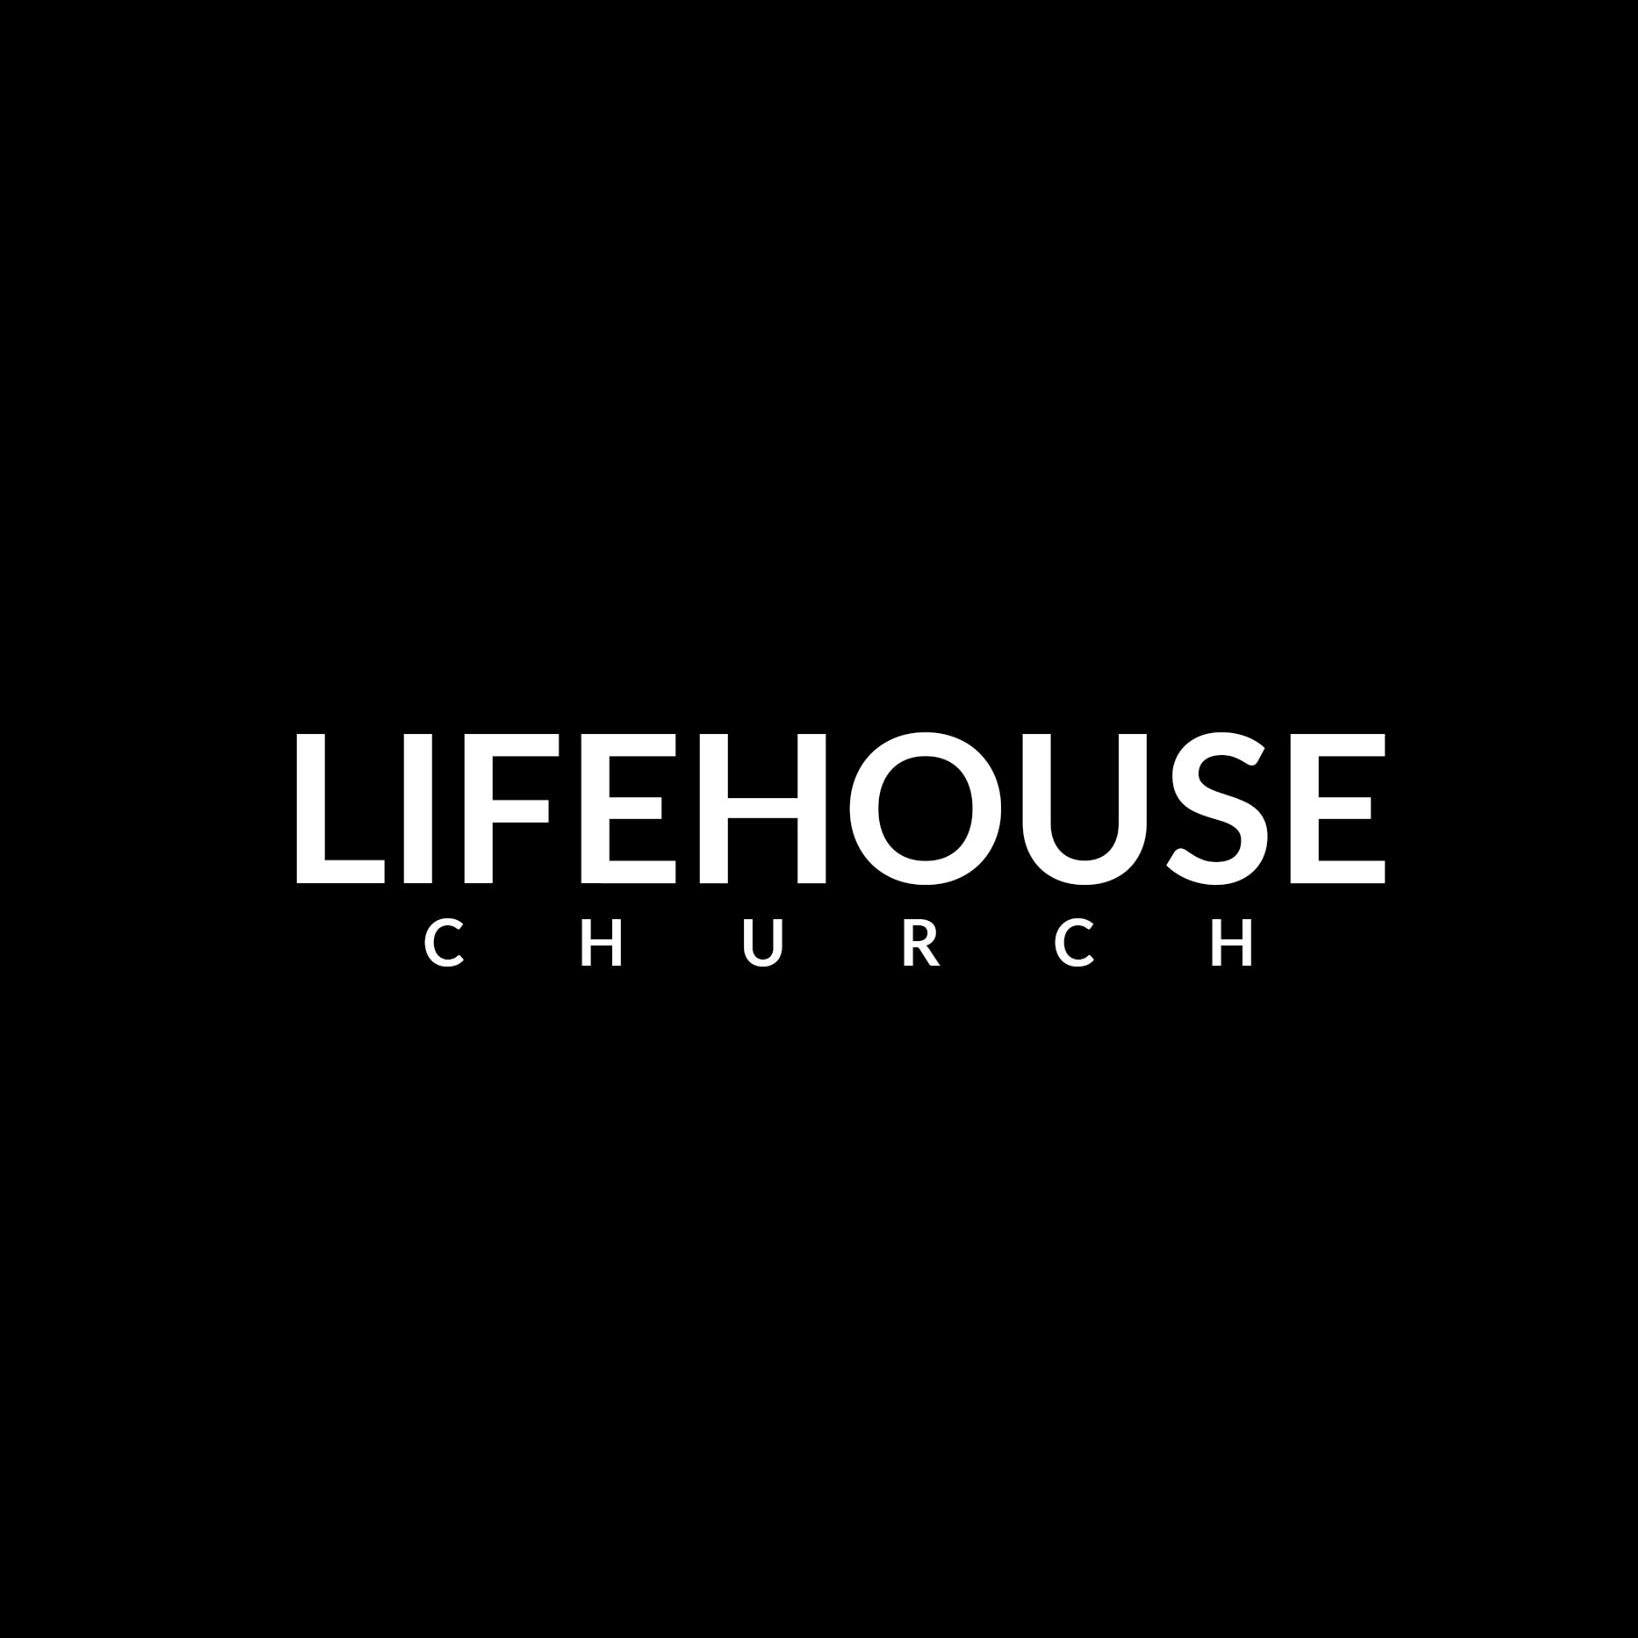 Lifehouse Church Kentucky Ave - Food Pantry